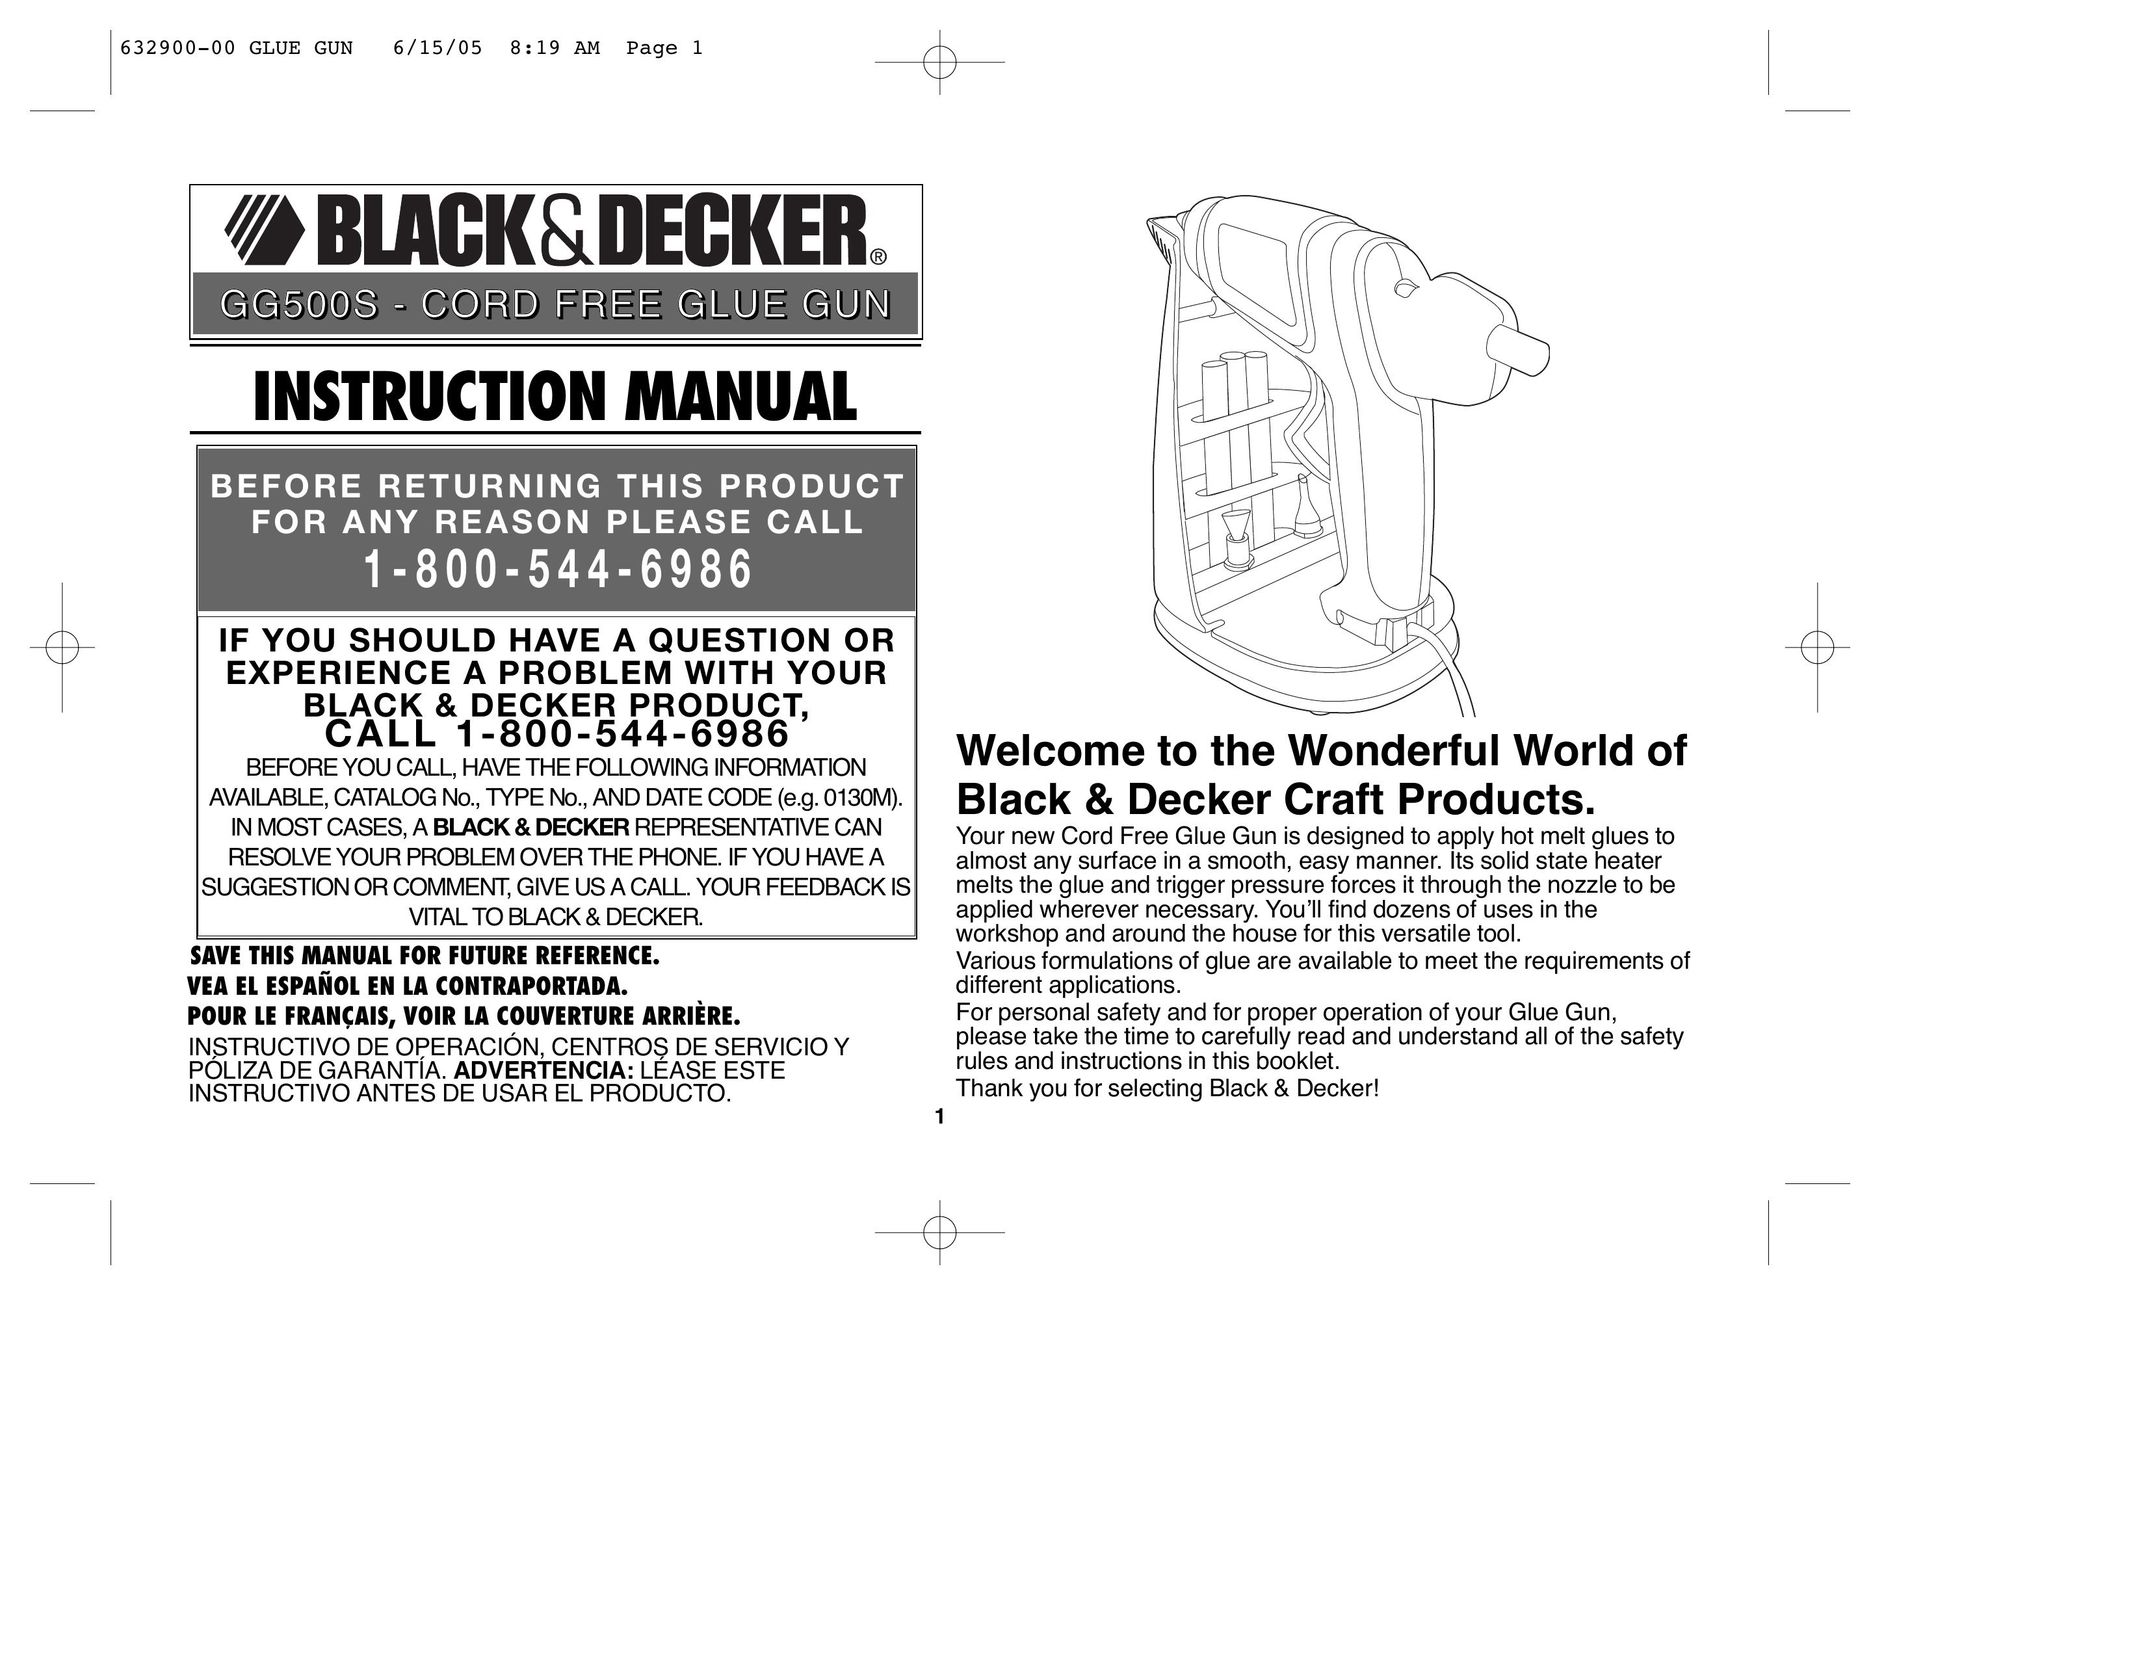 Black & Decker 632900-00 Glue Gun User Manual